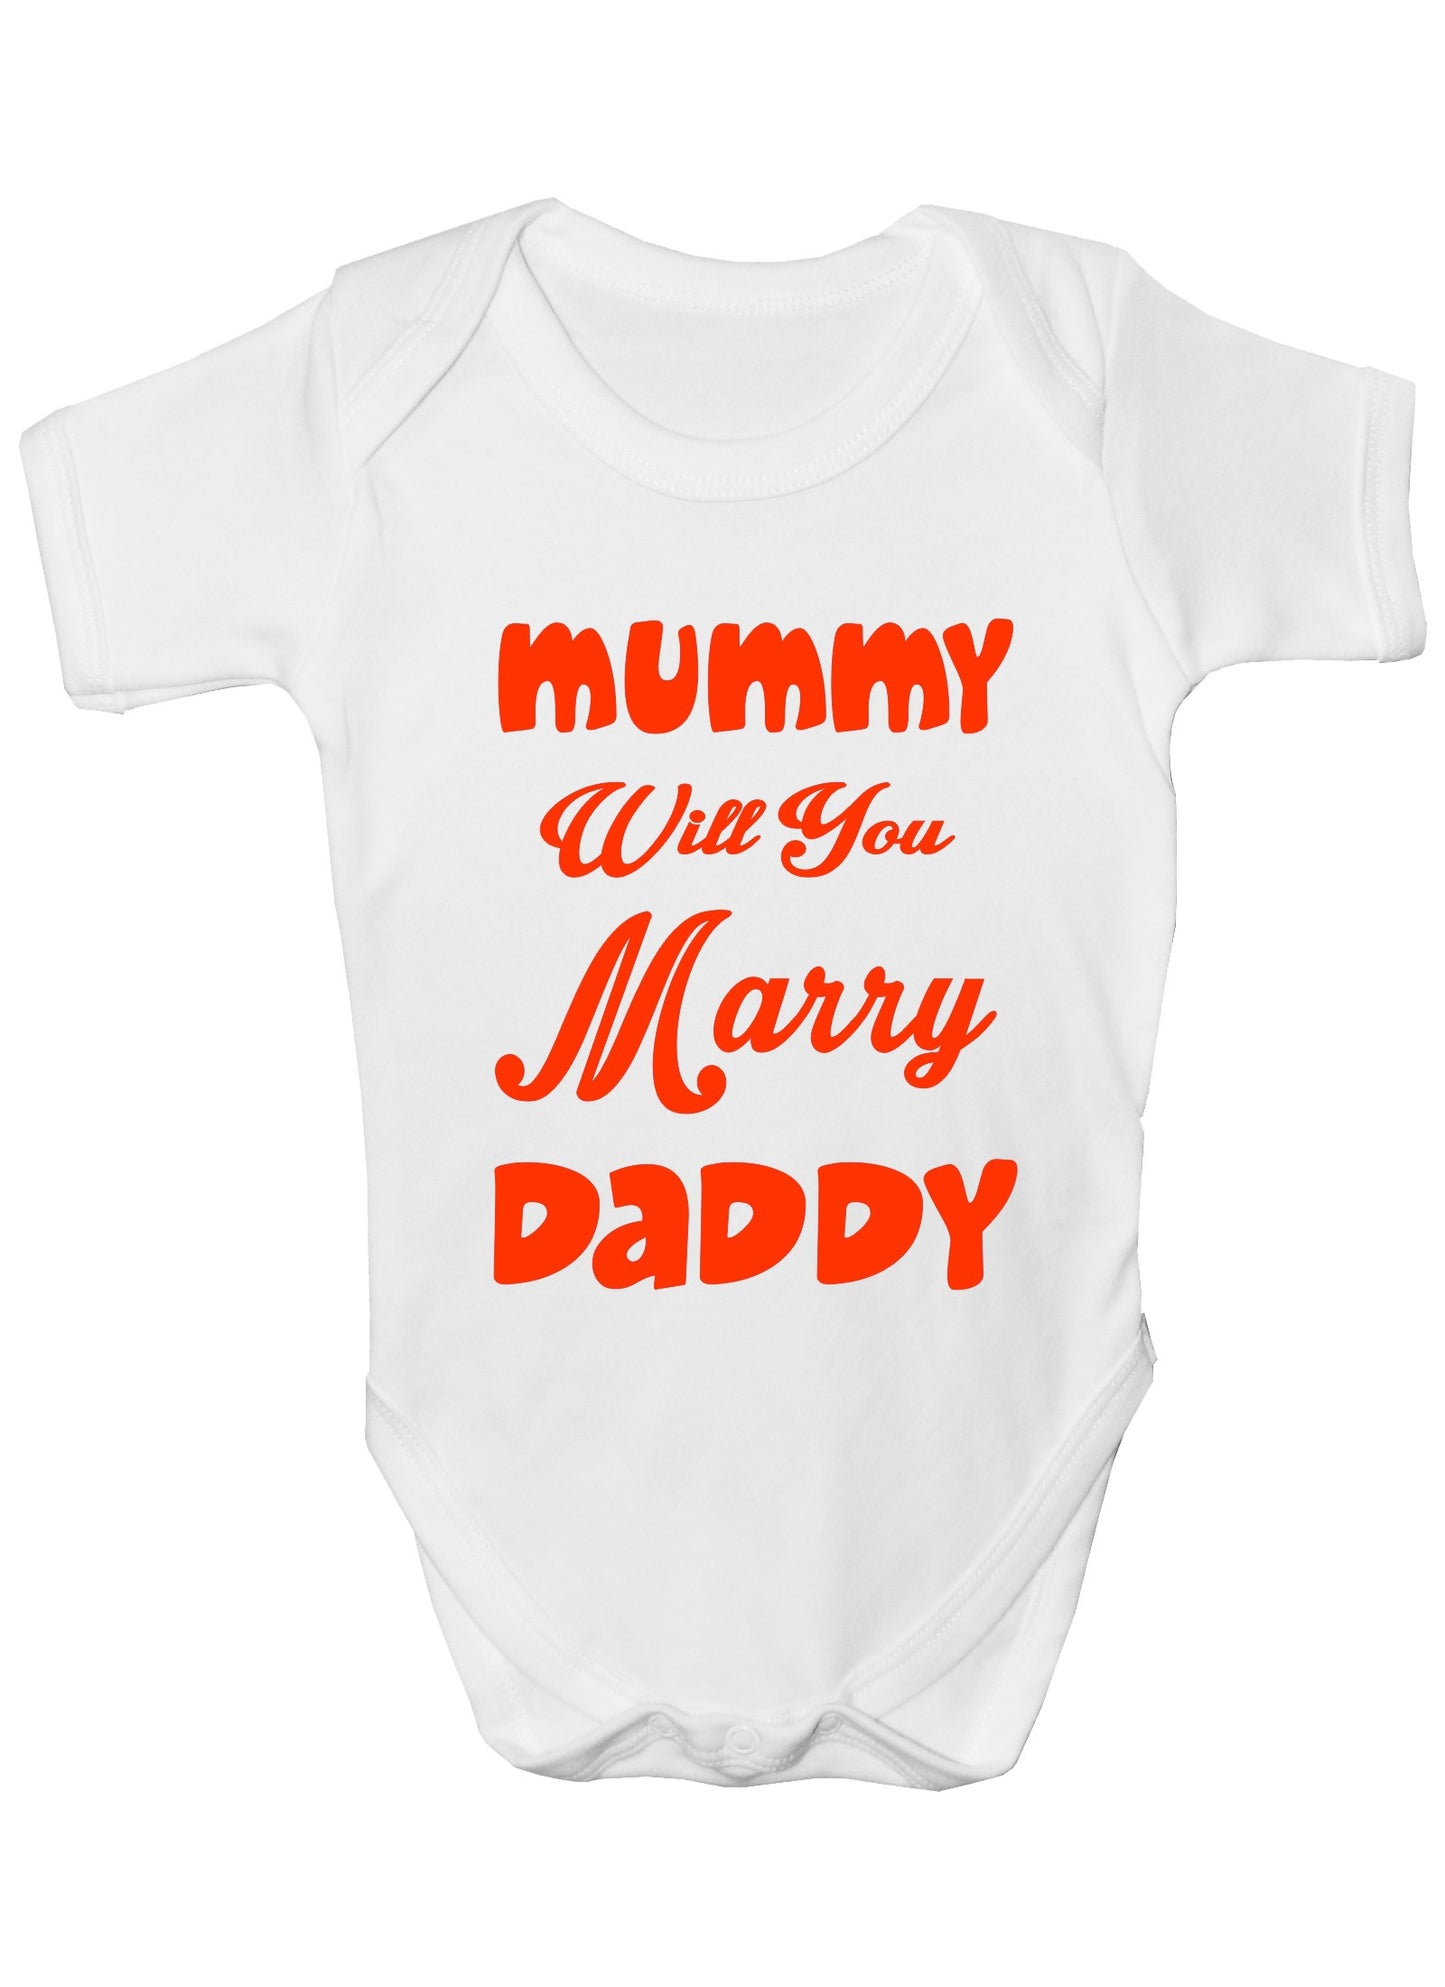 Mummy Will You Marry Daddy Funny Baby Onesie Vest Babygrow